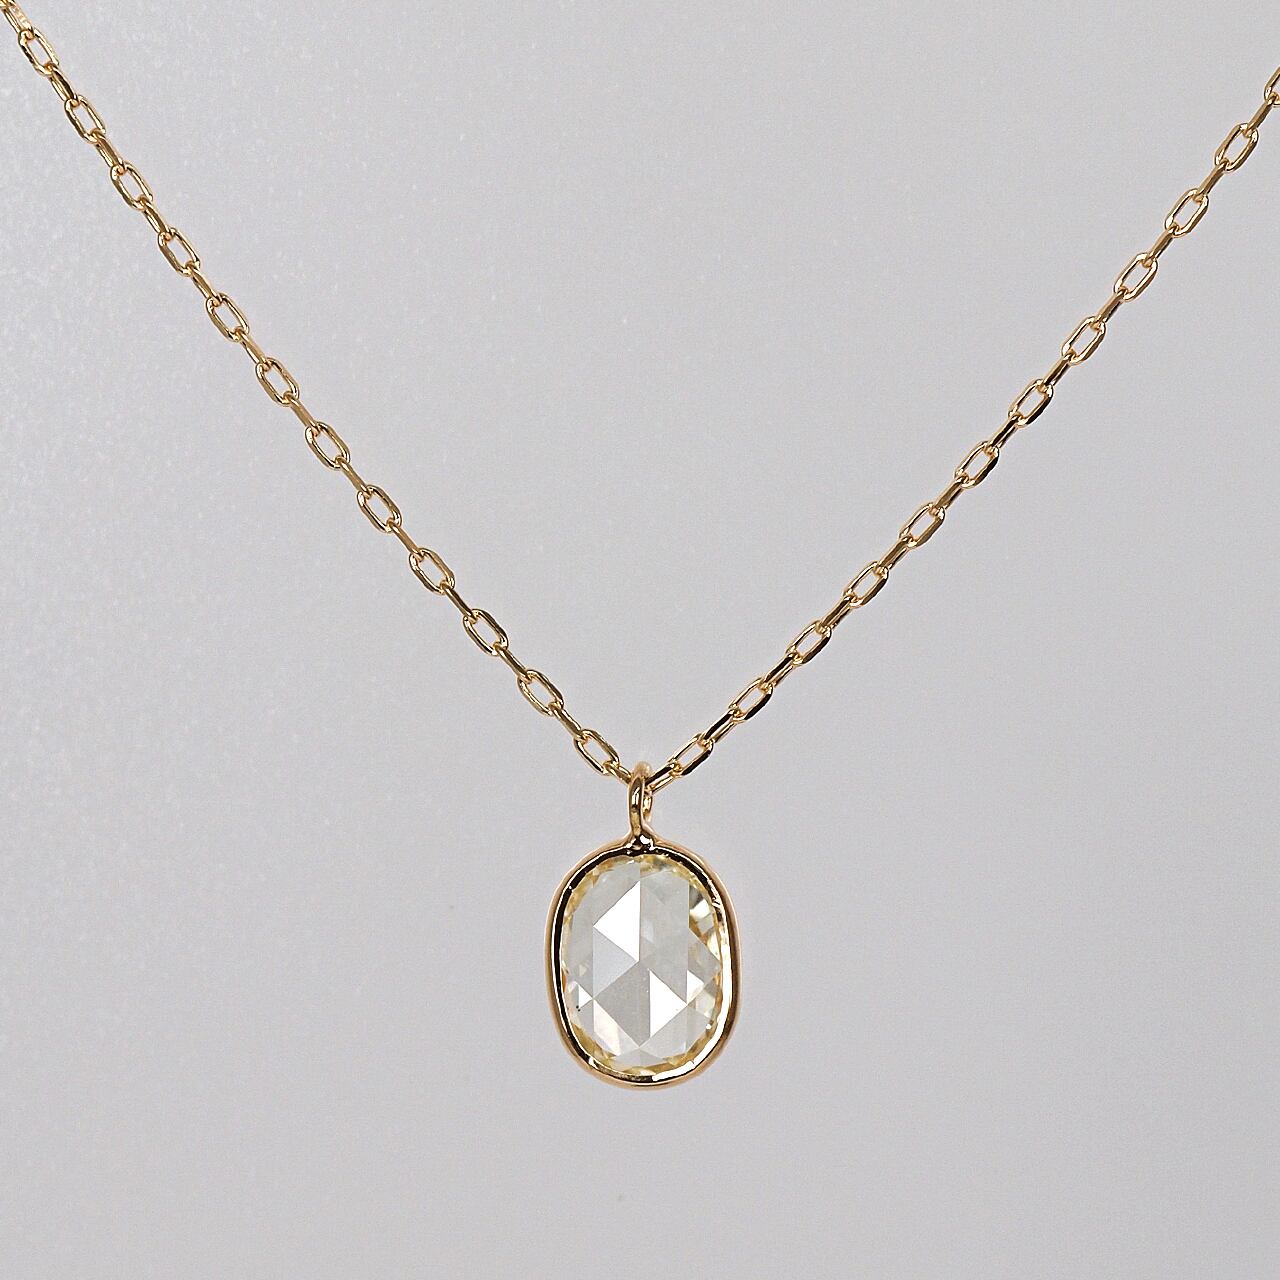 Rosecut diamond necklace / Oval